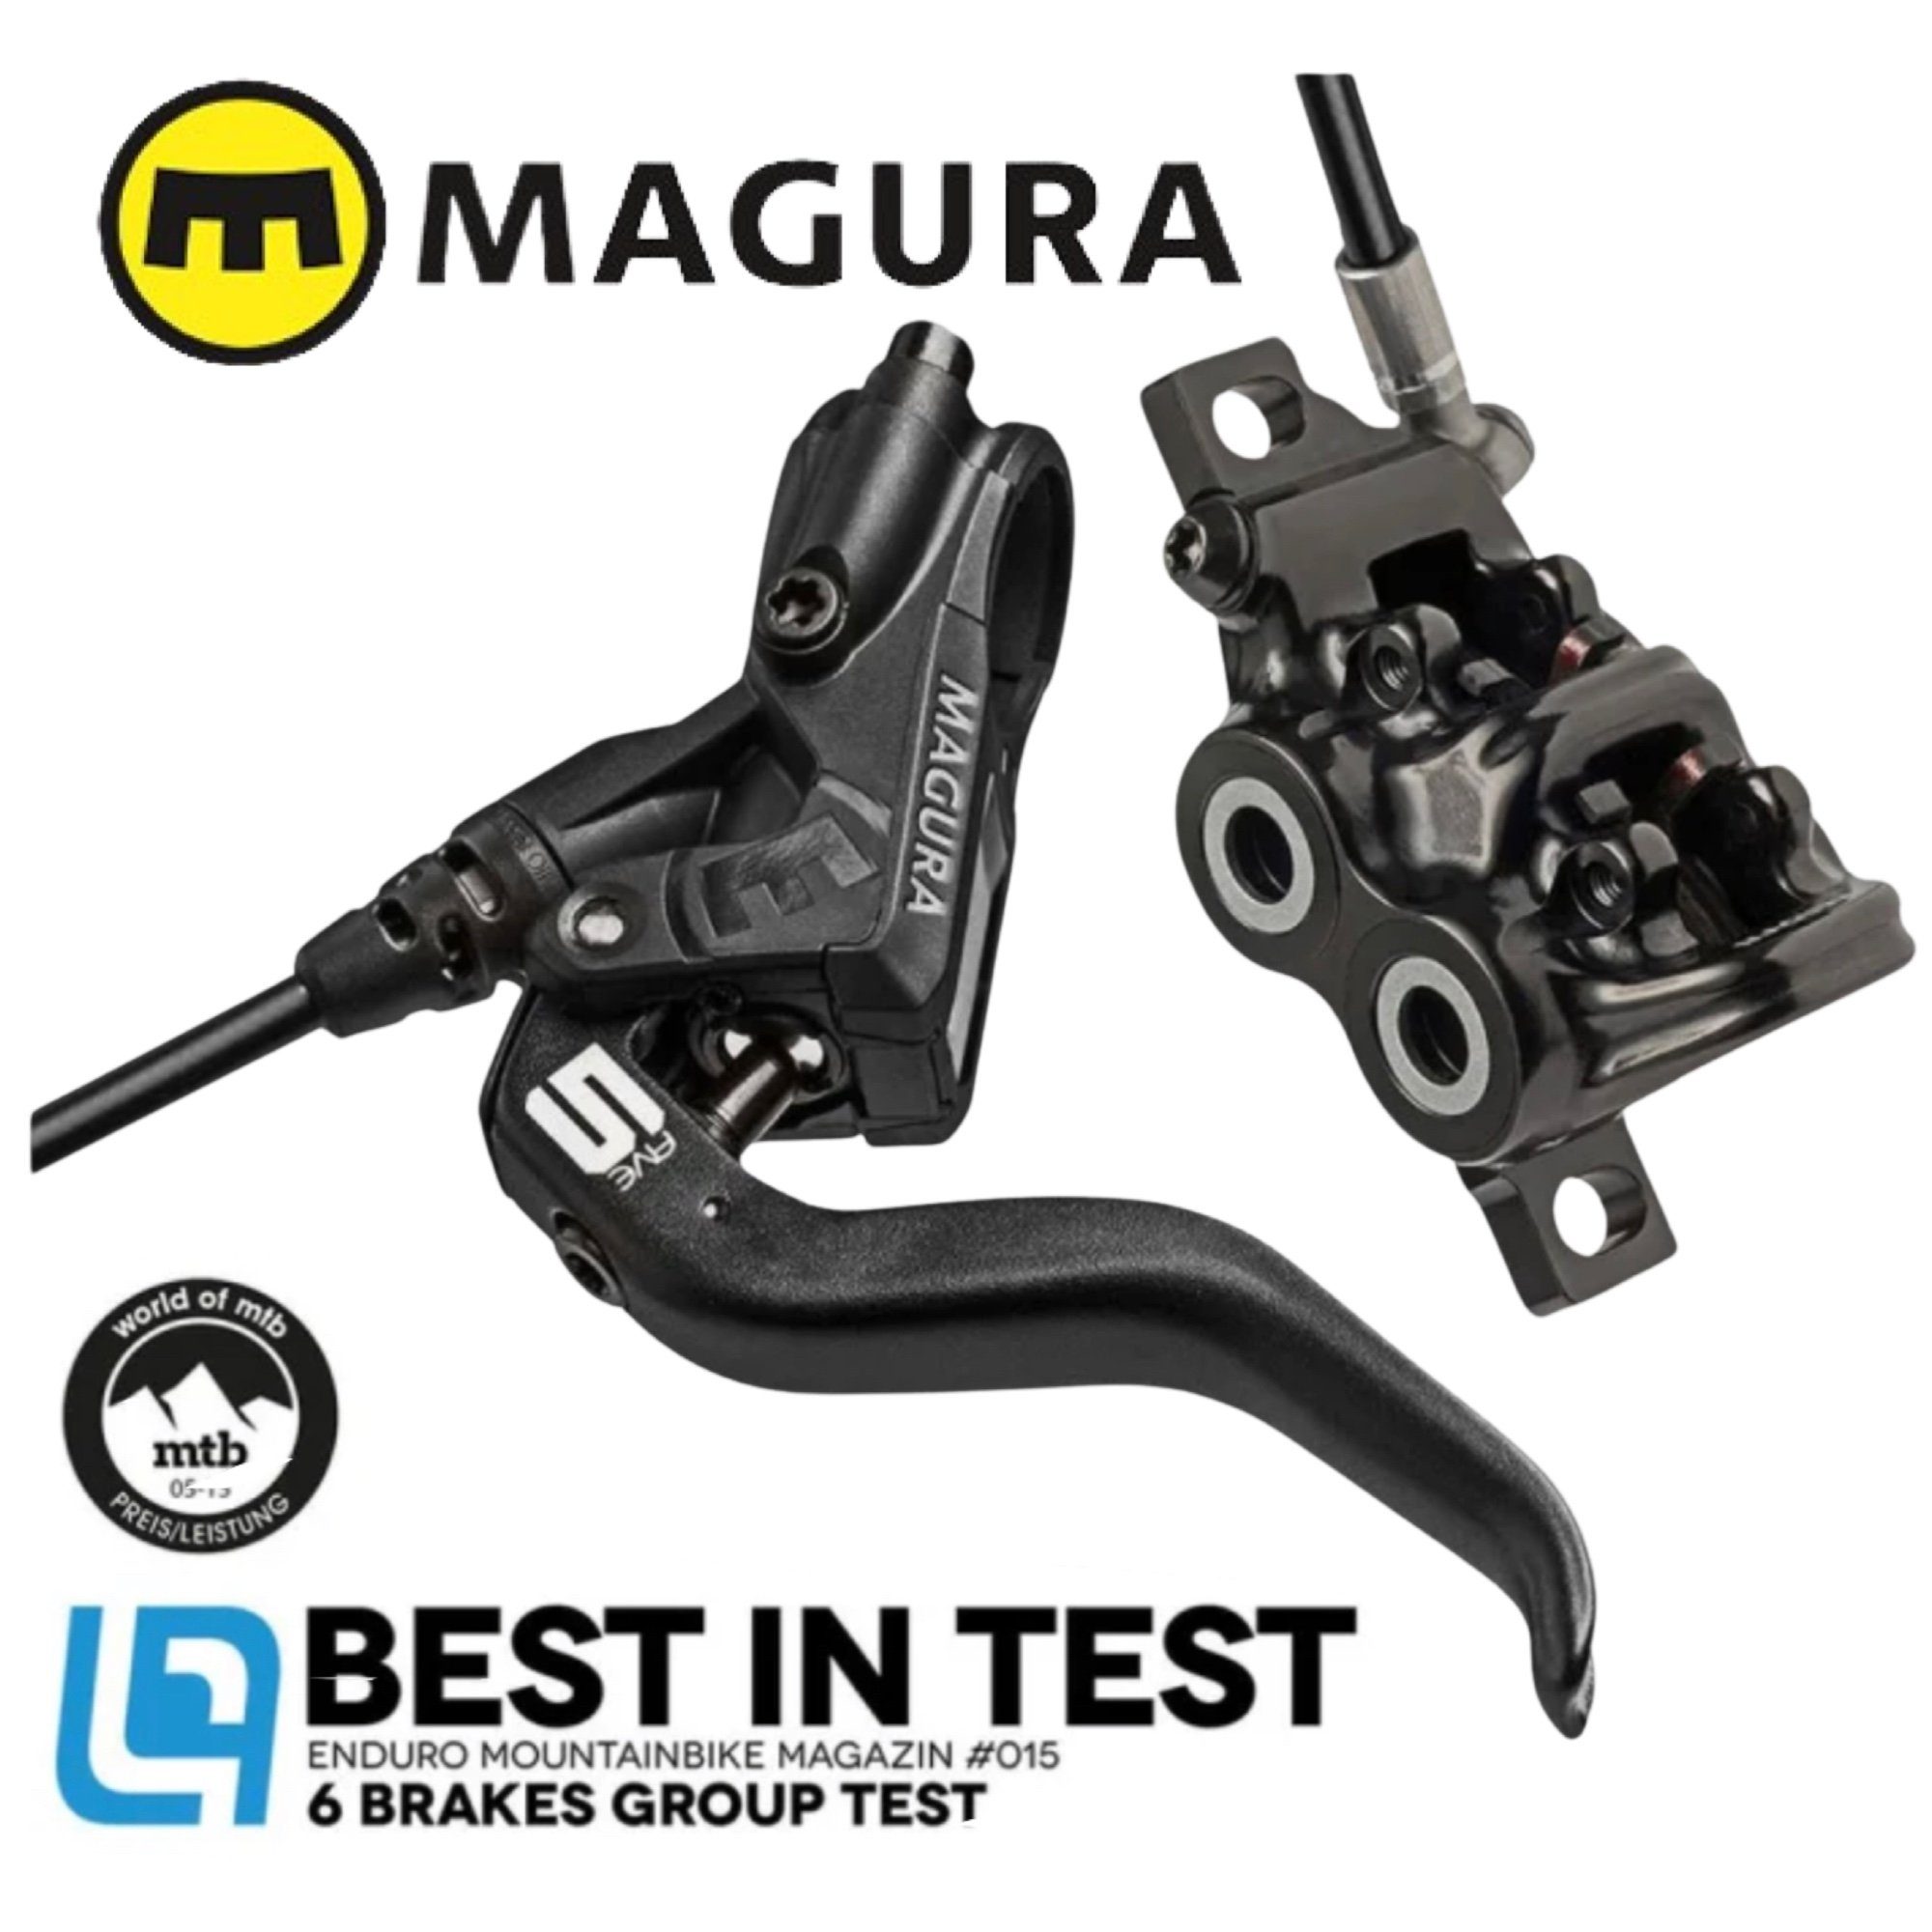 Magura Magura FR 2-Finger Ebike Aluminium-Leichtbau-Hebel mit MT5 Scheibenbremse Bremse MTB